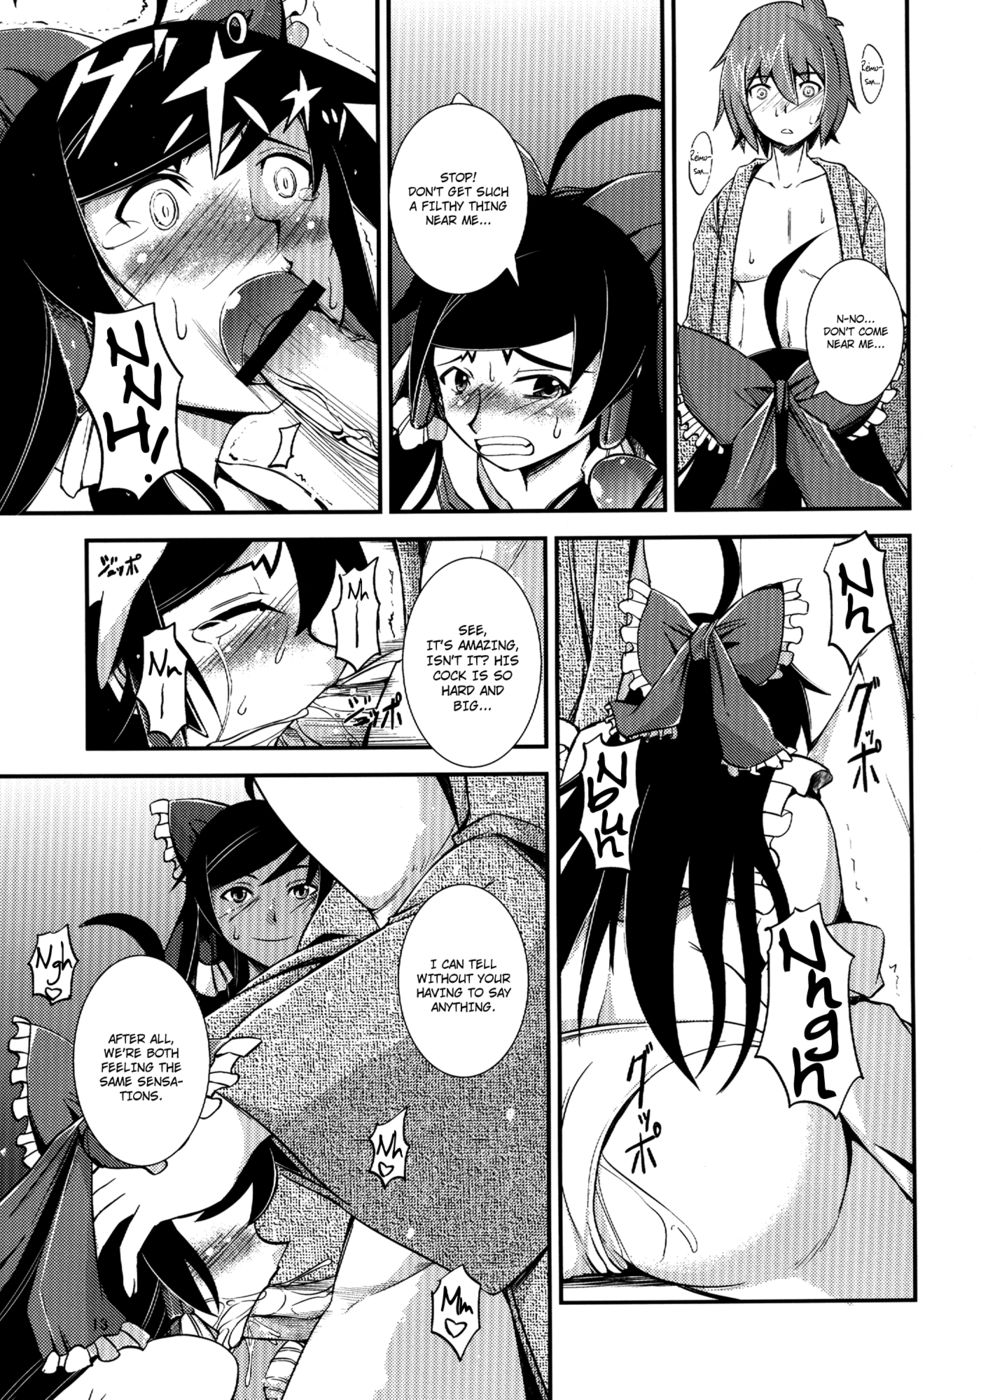 Hentai Manga Comic-The Incident of the Black Shrine Maiden-Chapter 3-11